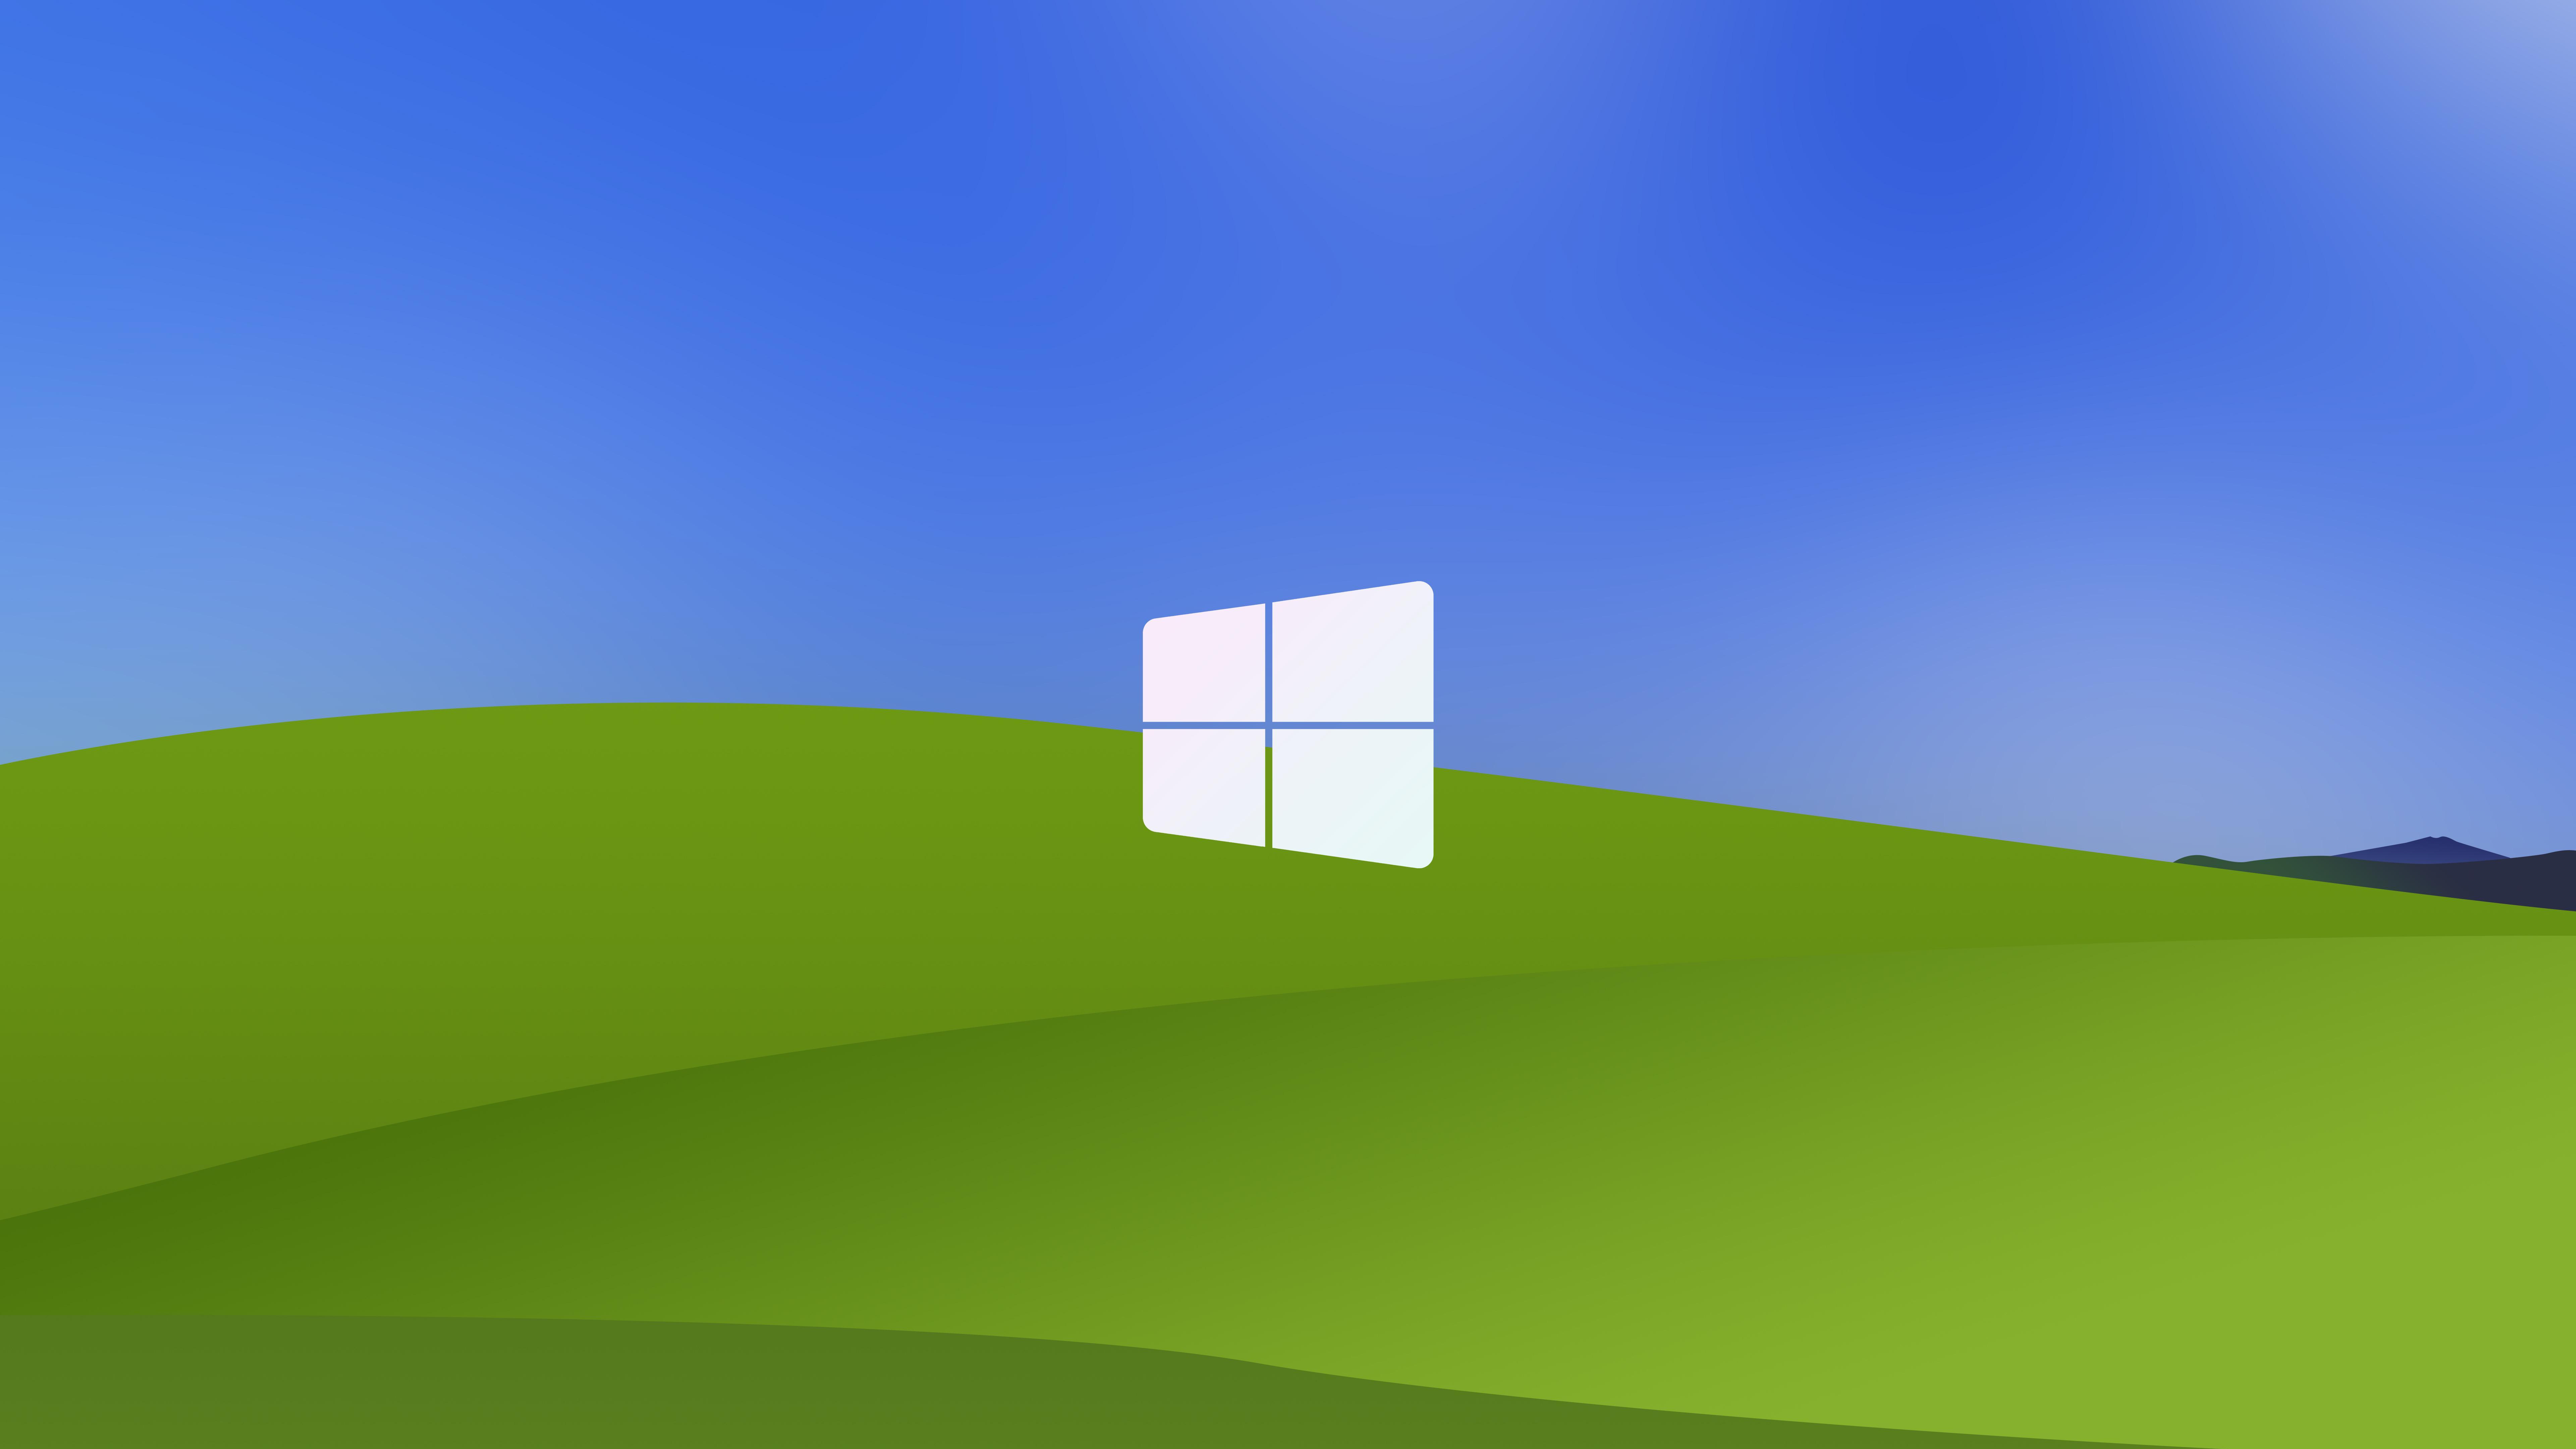 I Remade Windows Xp S Bliss Wallpaper In Minimalist Design R